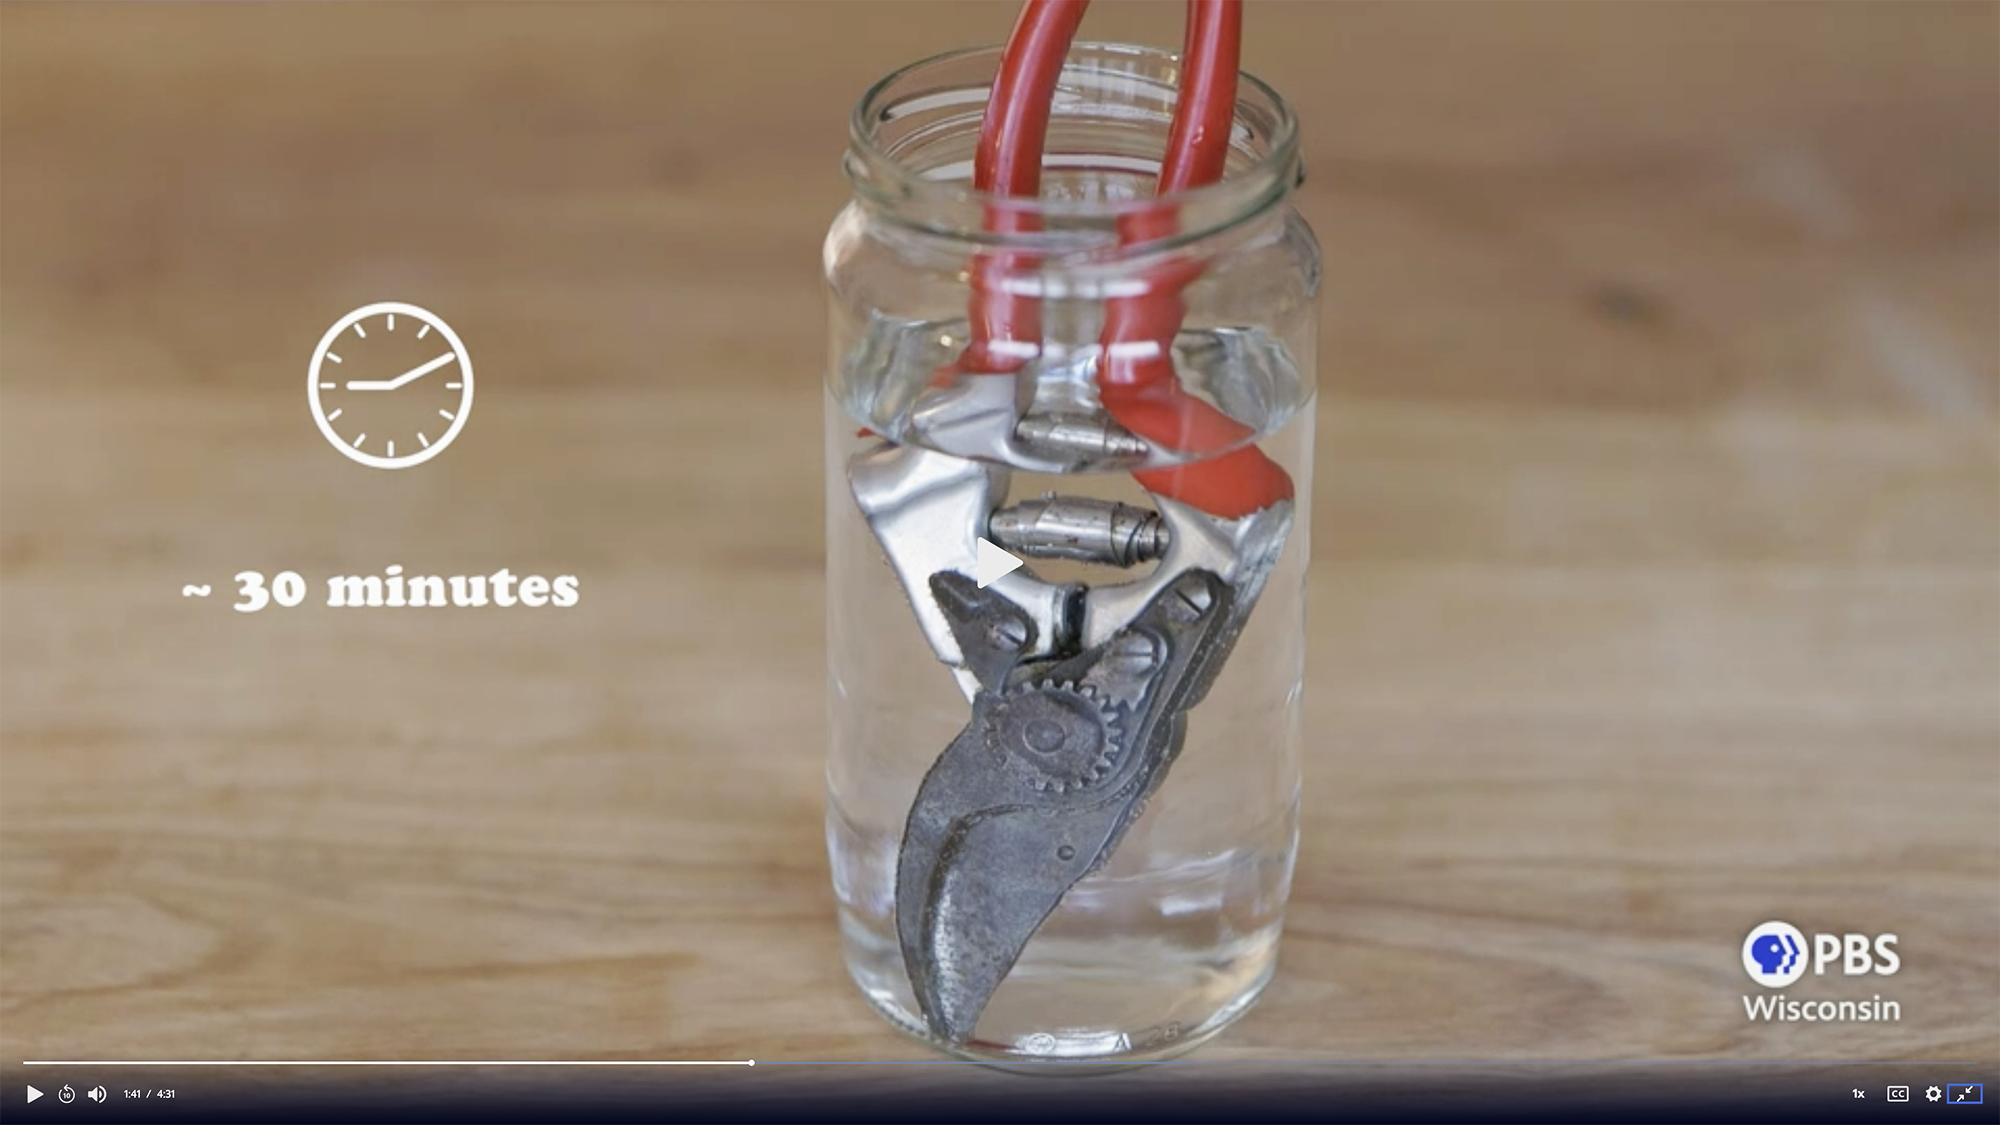 video still of gardening pruners soaking in a jar of vinegar